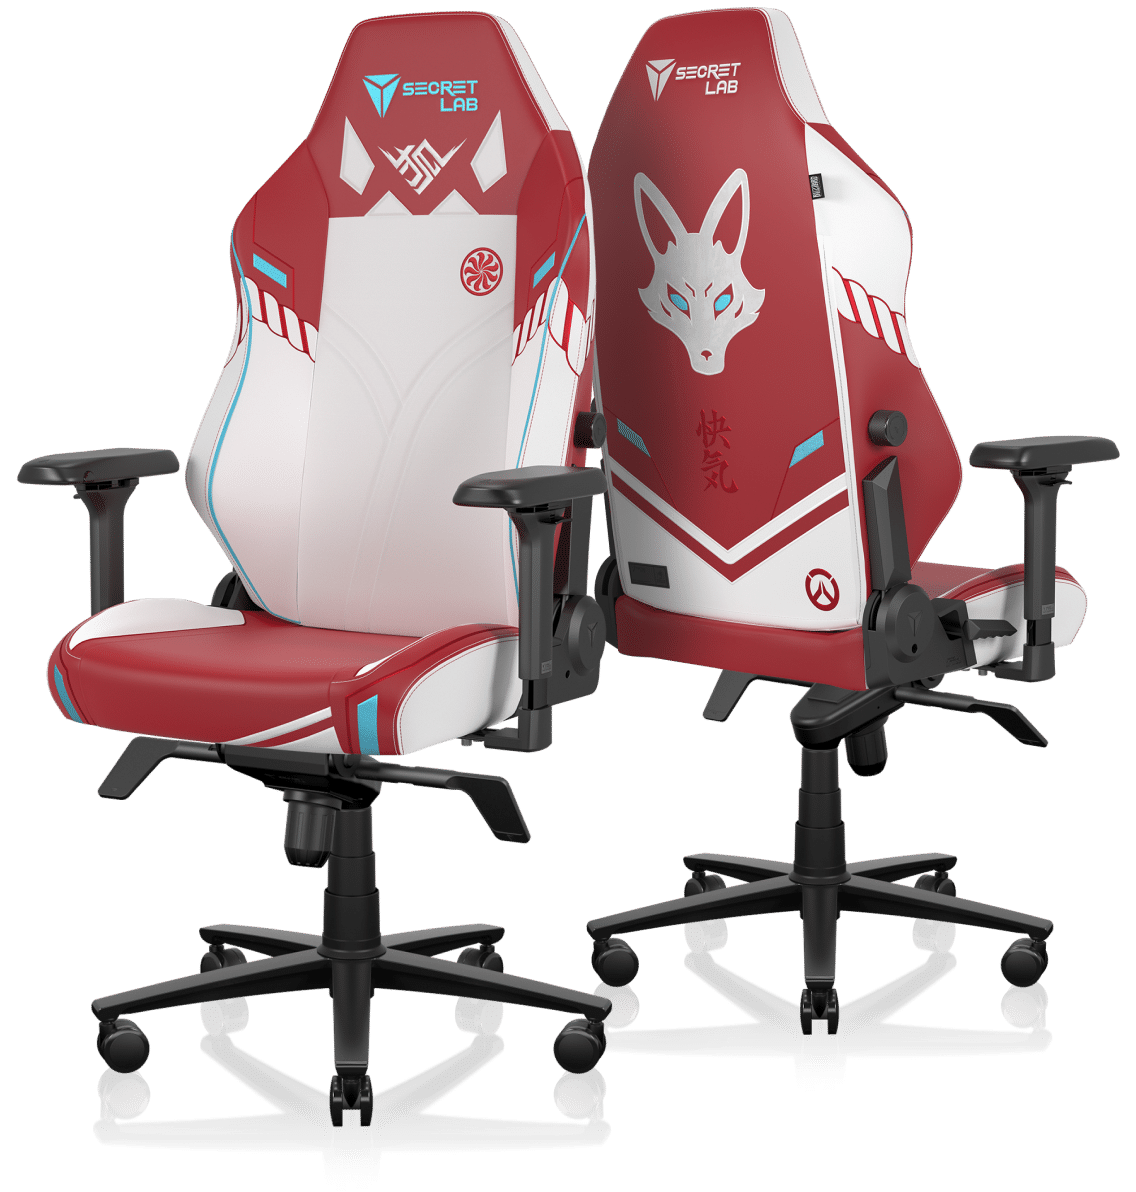 Team Secret x Secretlab gaming chair